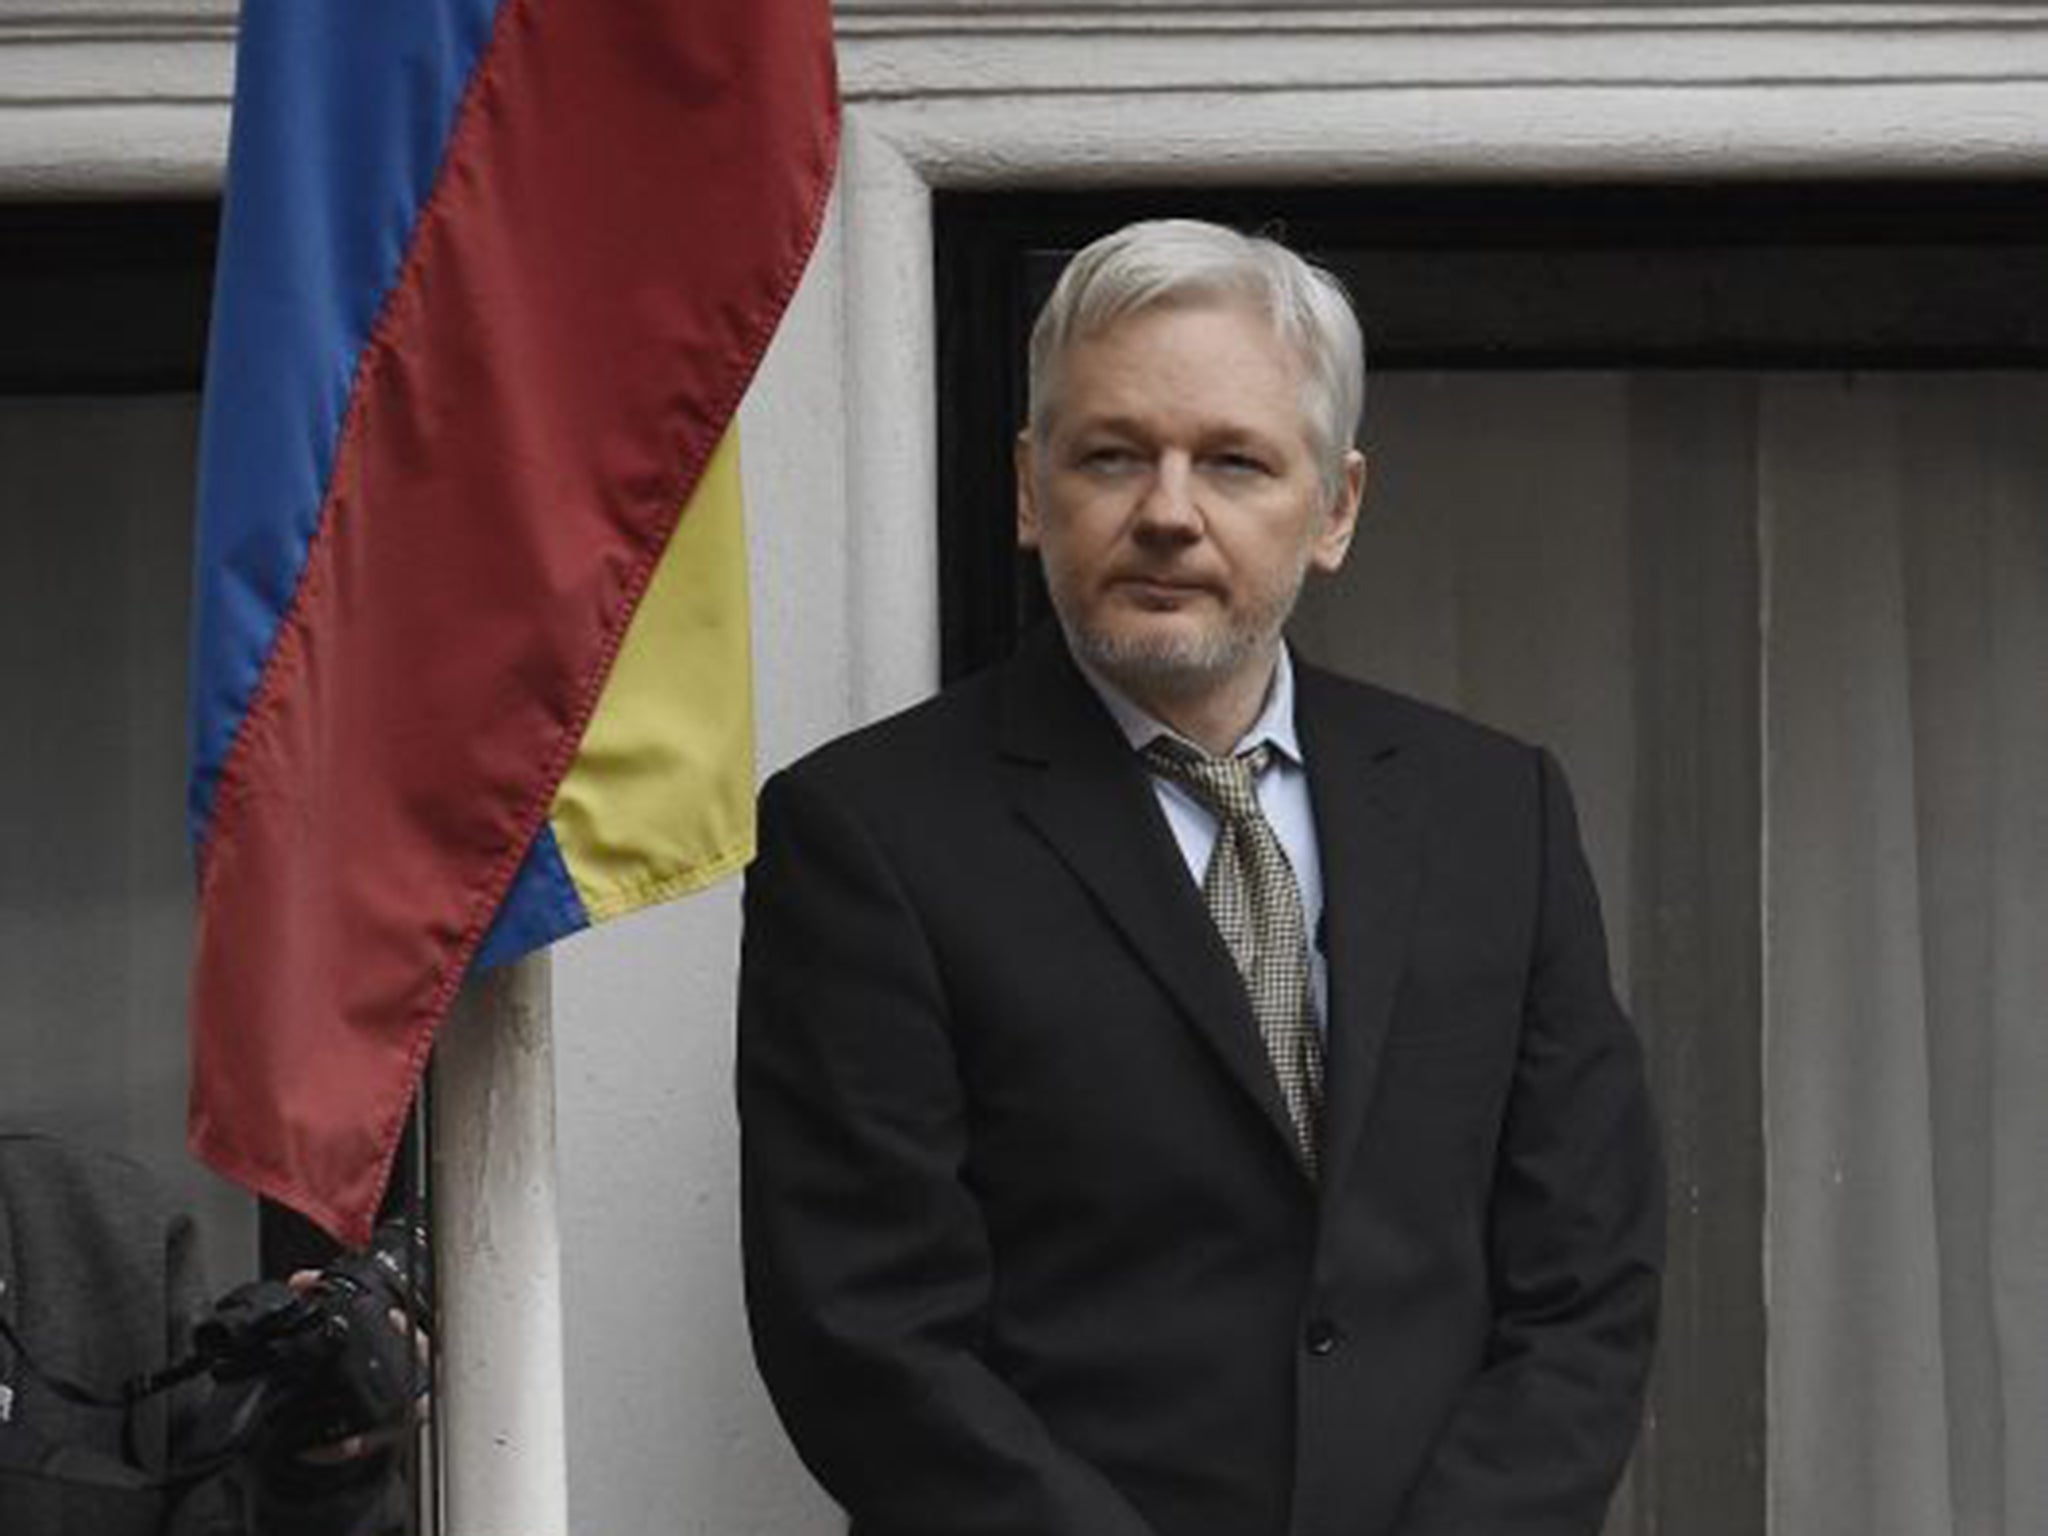 Julian Assange: Swedish court upholds arrest warrant for 